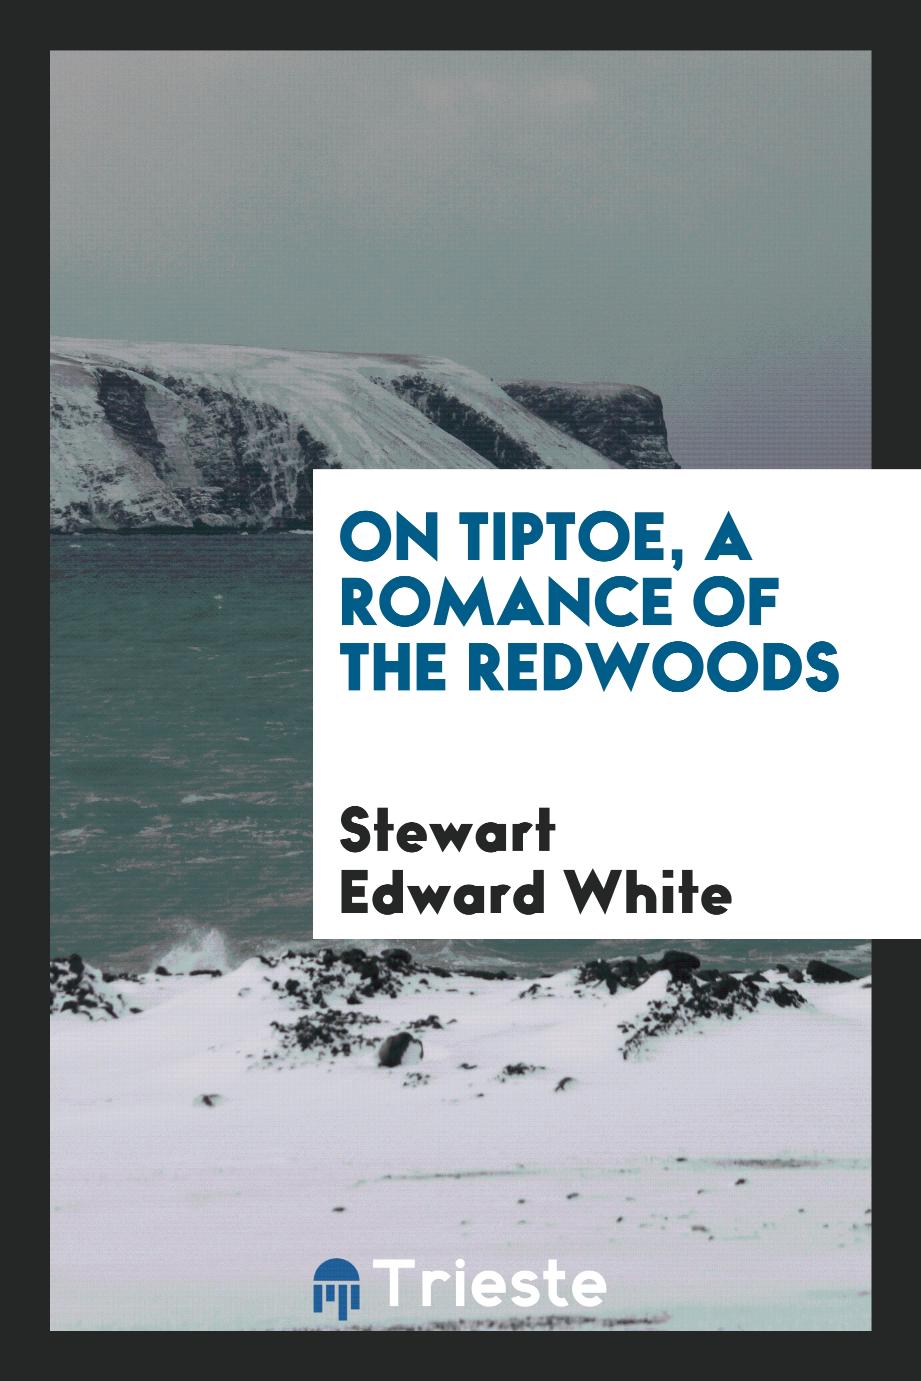 On tiptoe, a romance of the redwoods